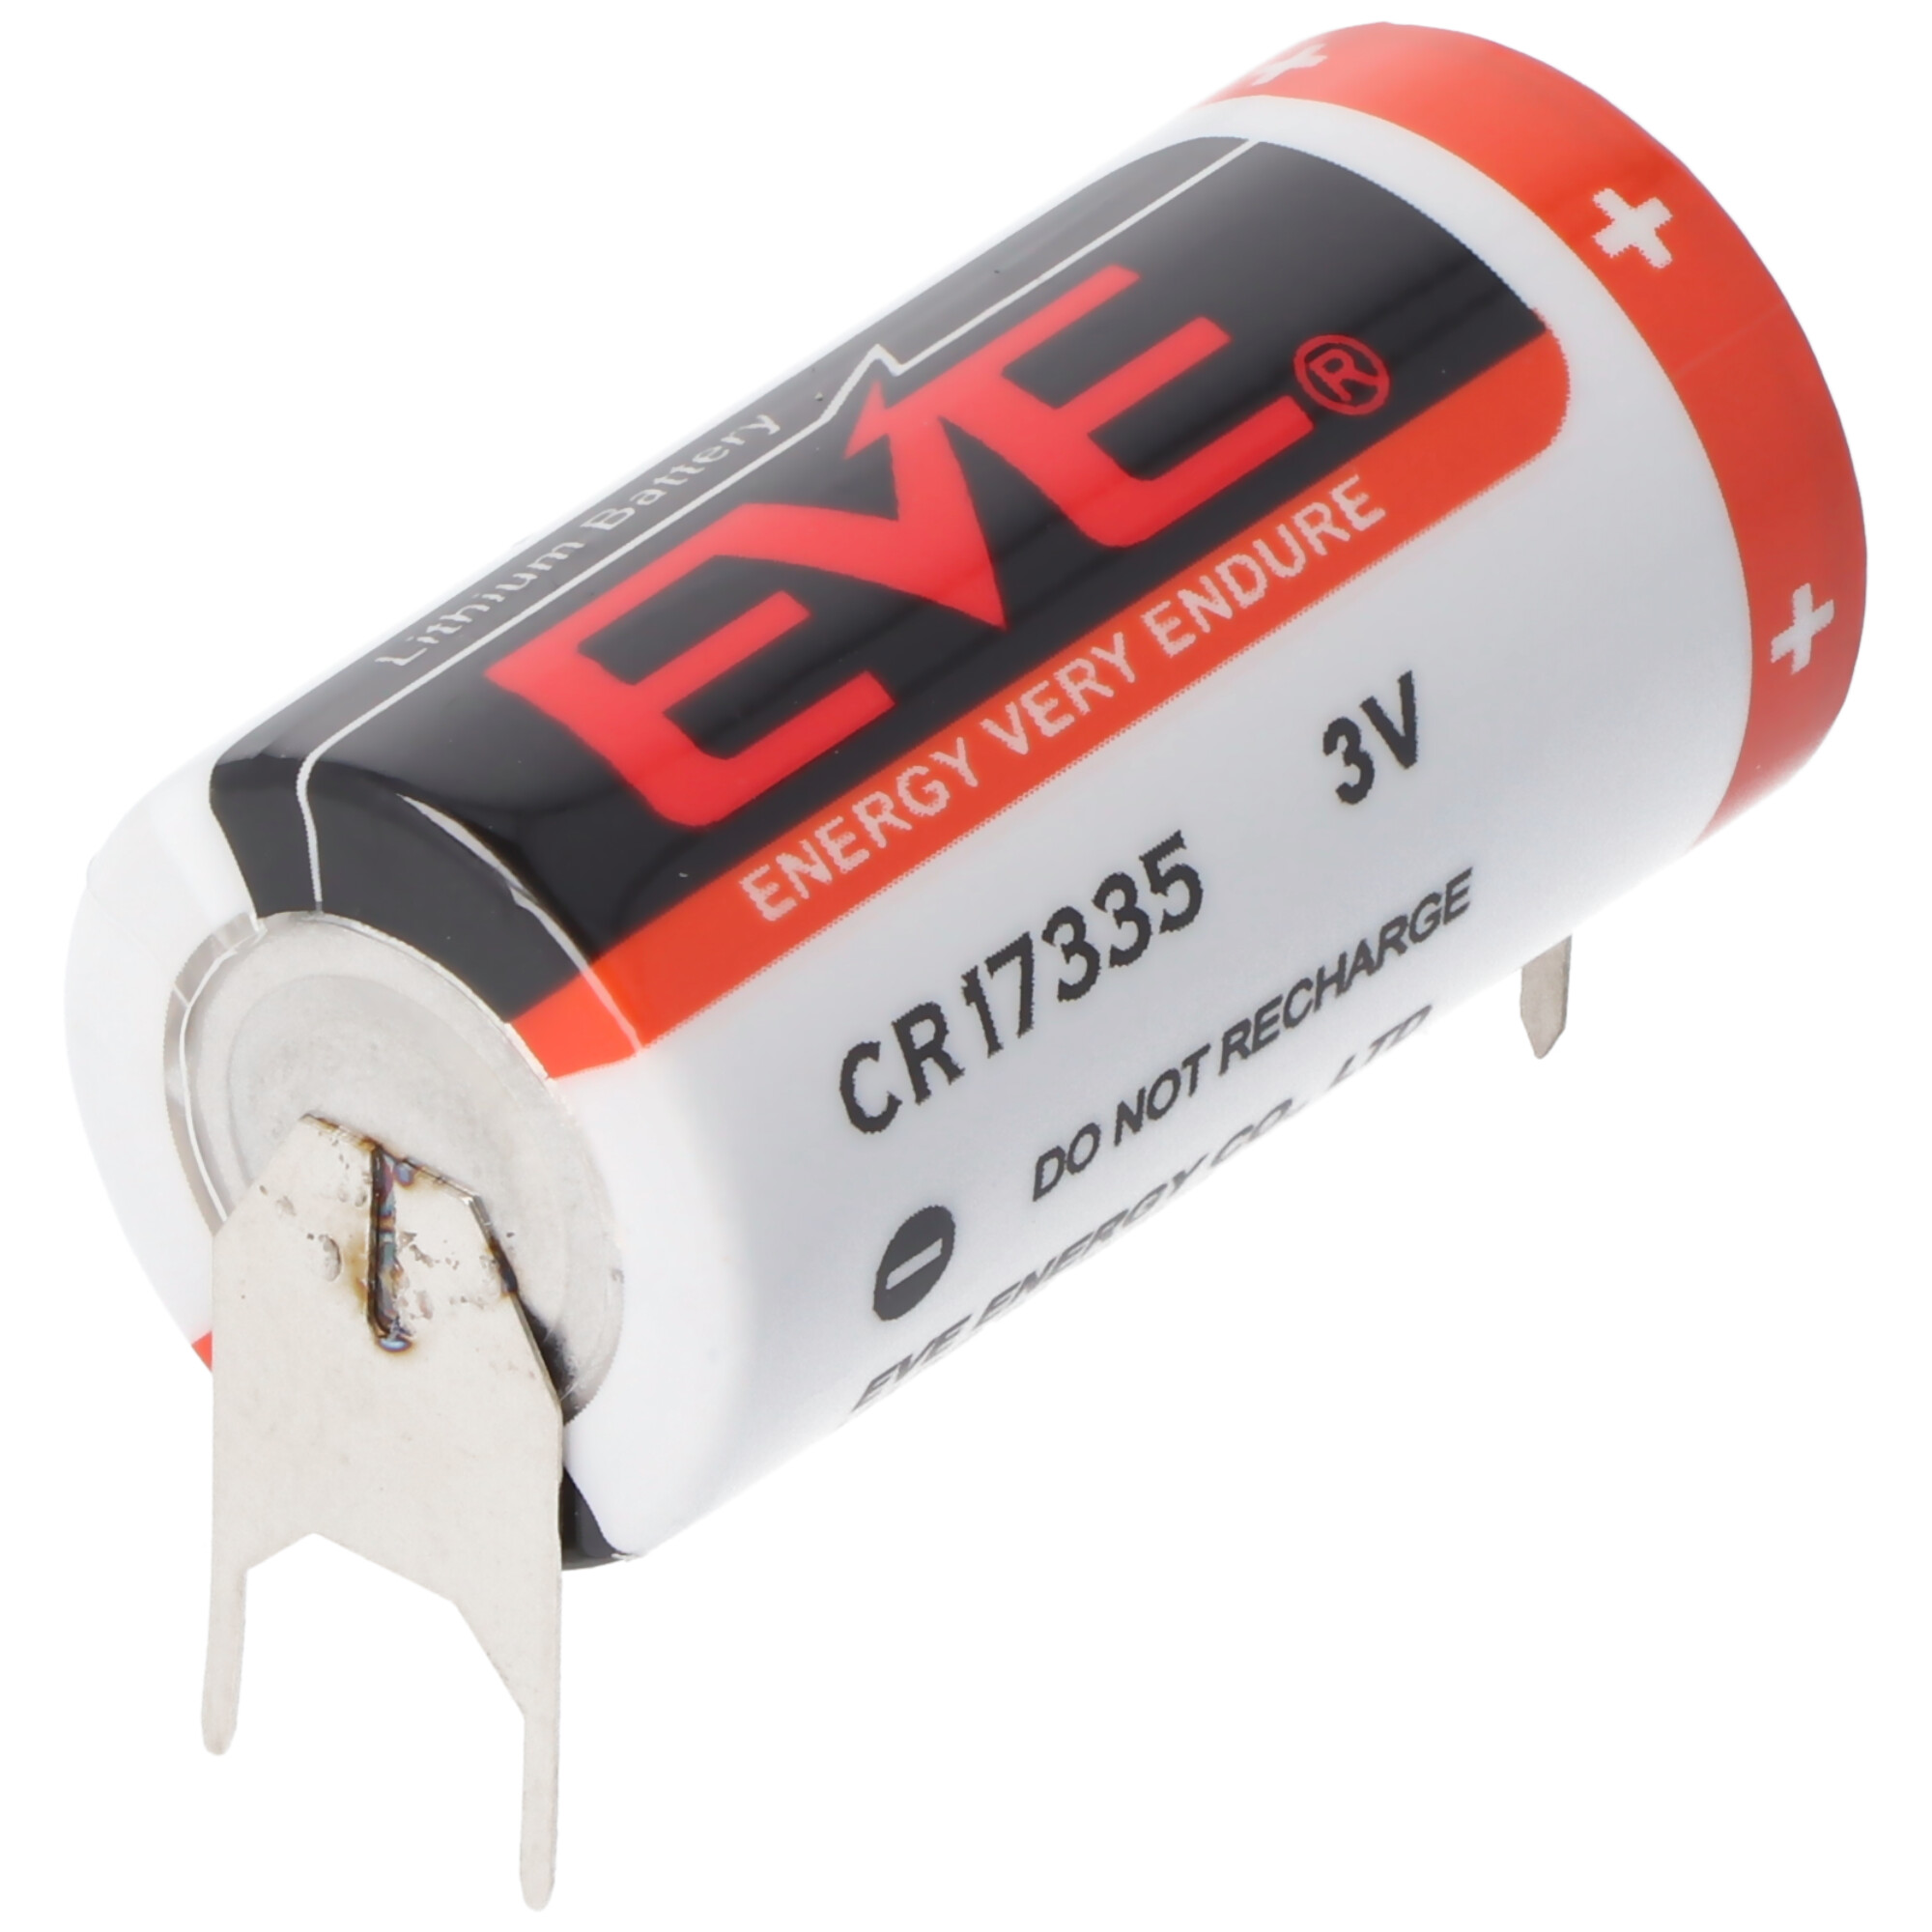 E.V.E CR17335 Batterie Baugröße 2/3A mit 3 Volt Spannung und 1550mAh Kapazität, Abmessungen 33,5 x 17mm, mit Printkontakten +/-- 7,6mm Rastermaß